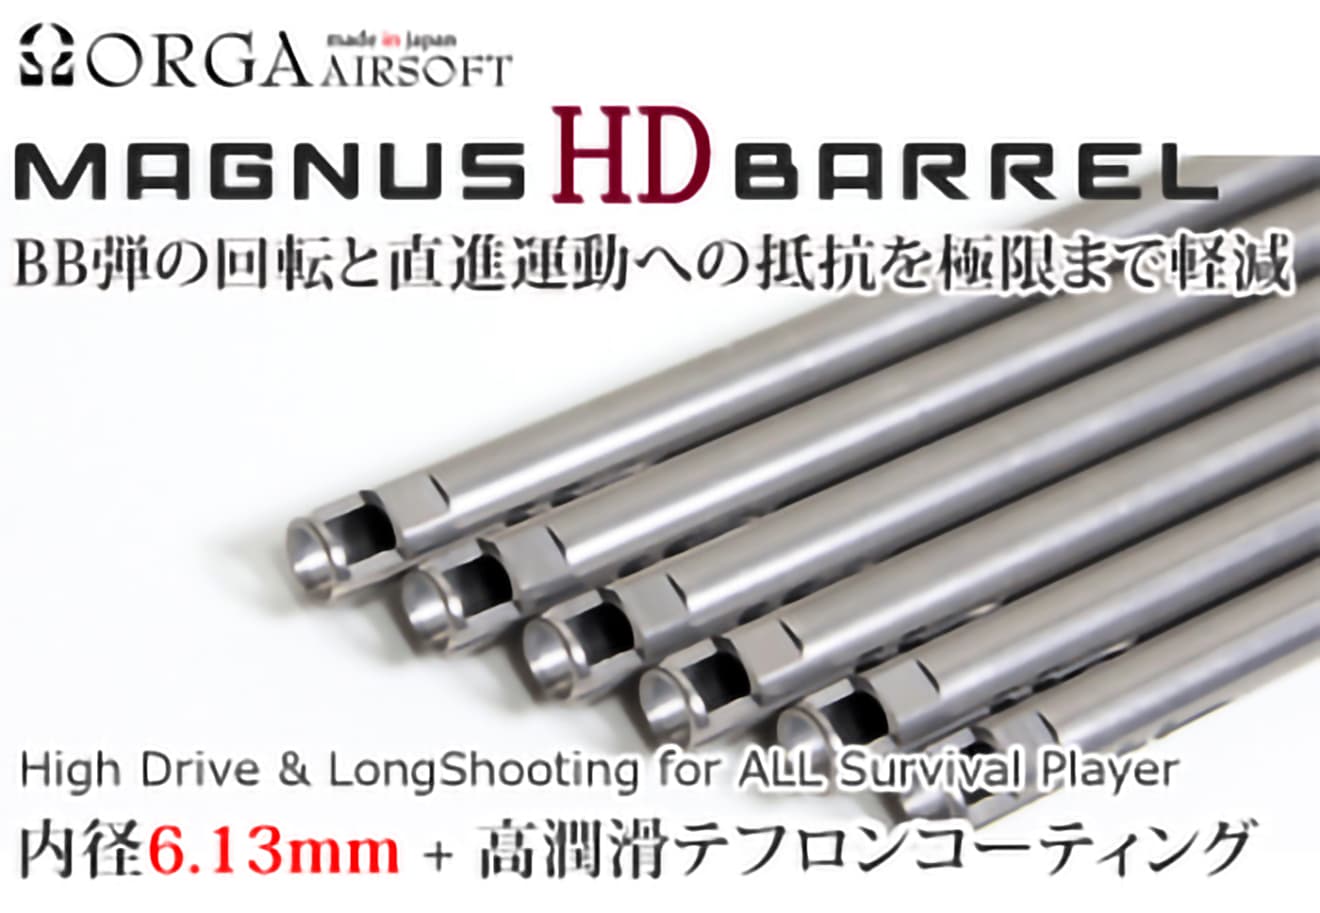 ORGA AIRSOFT MAGNUS HDバレル 6.13mm 電動ガン用 [長さ：182mm / 260mm / 303mm / 363mm]